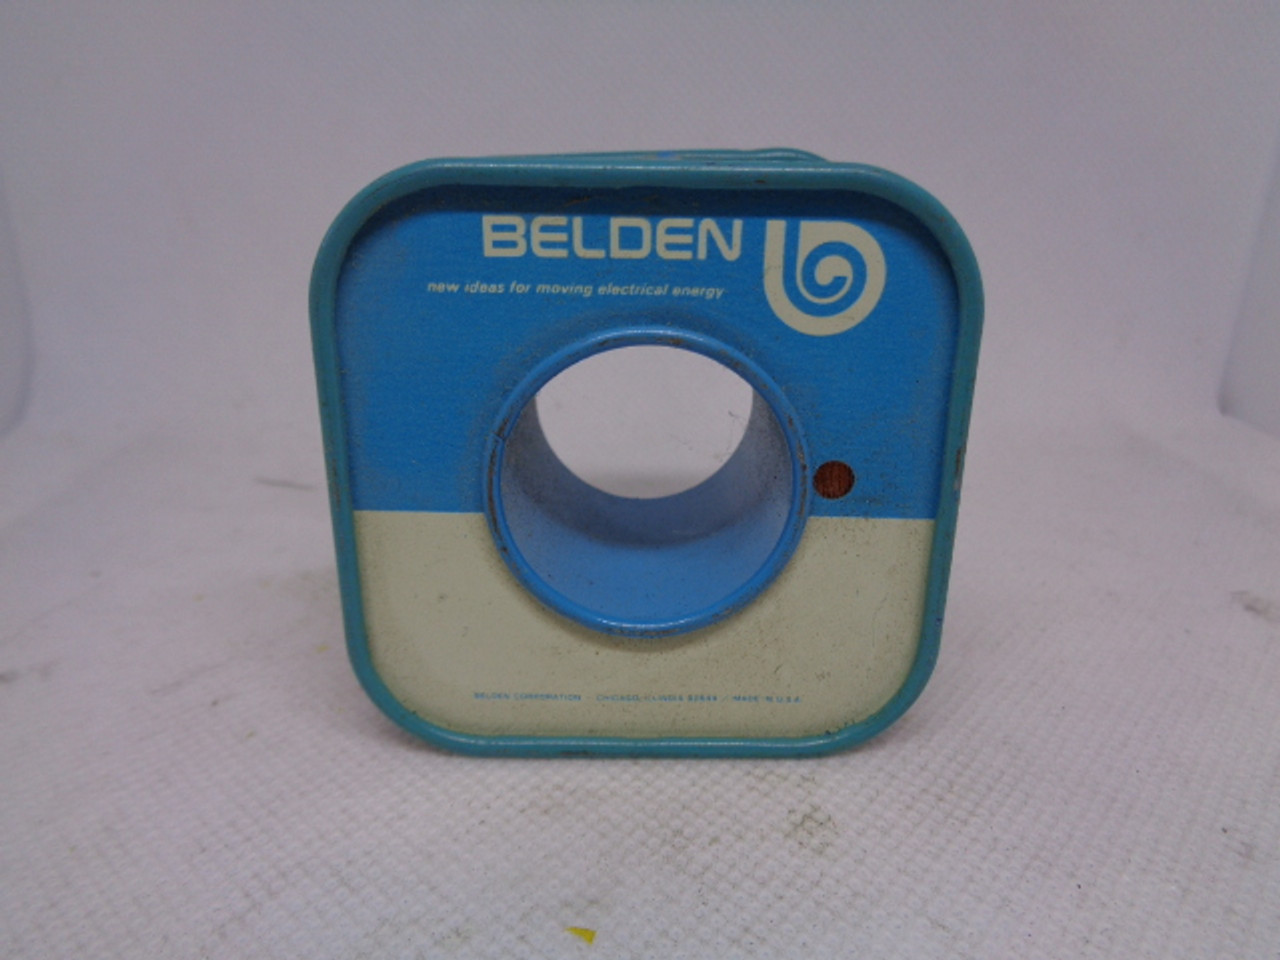 Belden 8069 34 AWG HVY. Polythermaleze Wire, 1/2 LB. - New